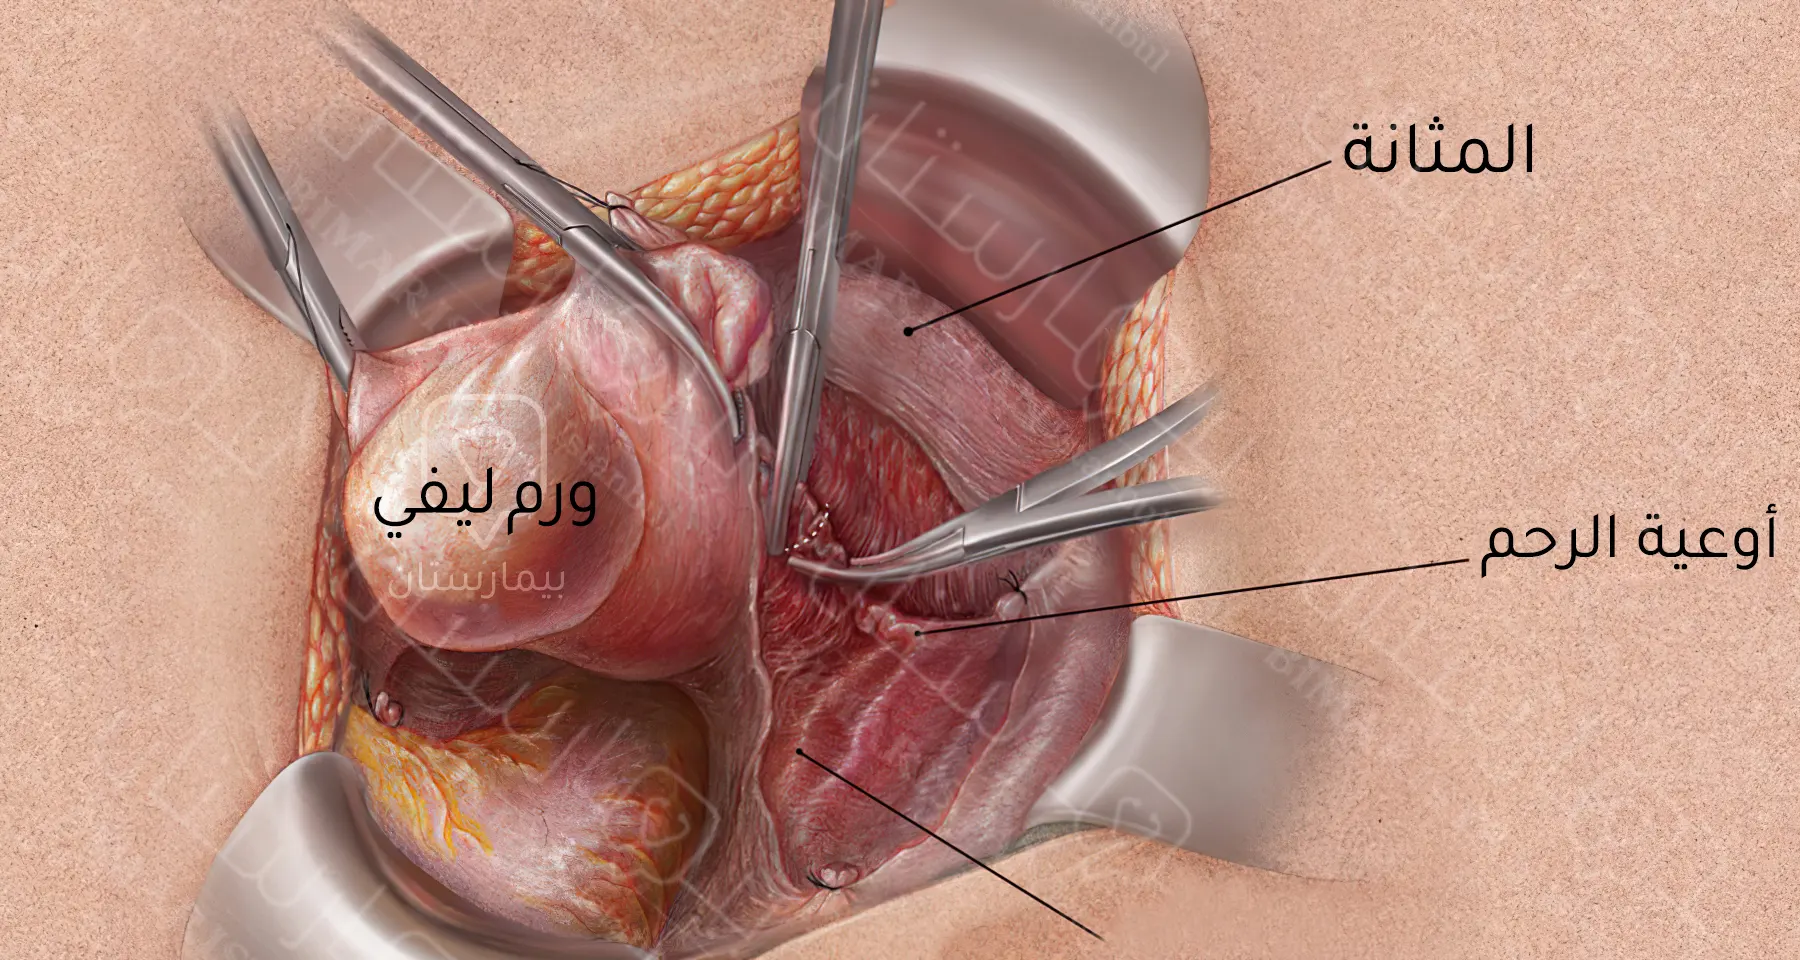 Transvers abdominal kesi sonrası transabdominal histerektomi